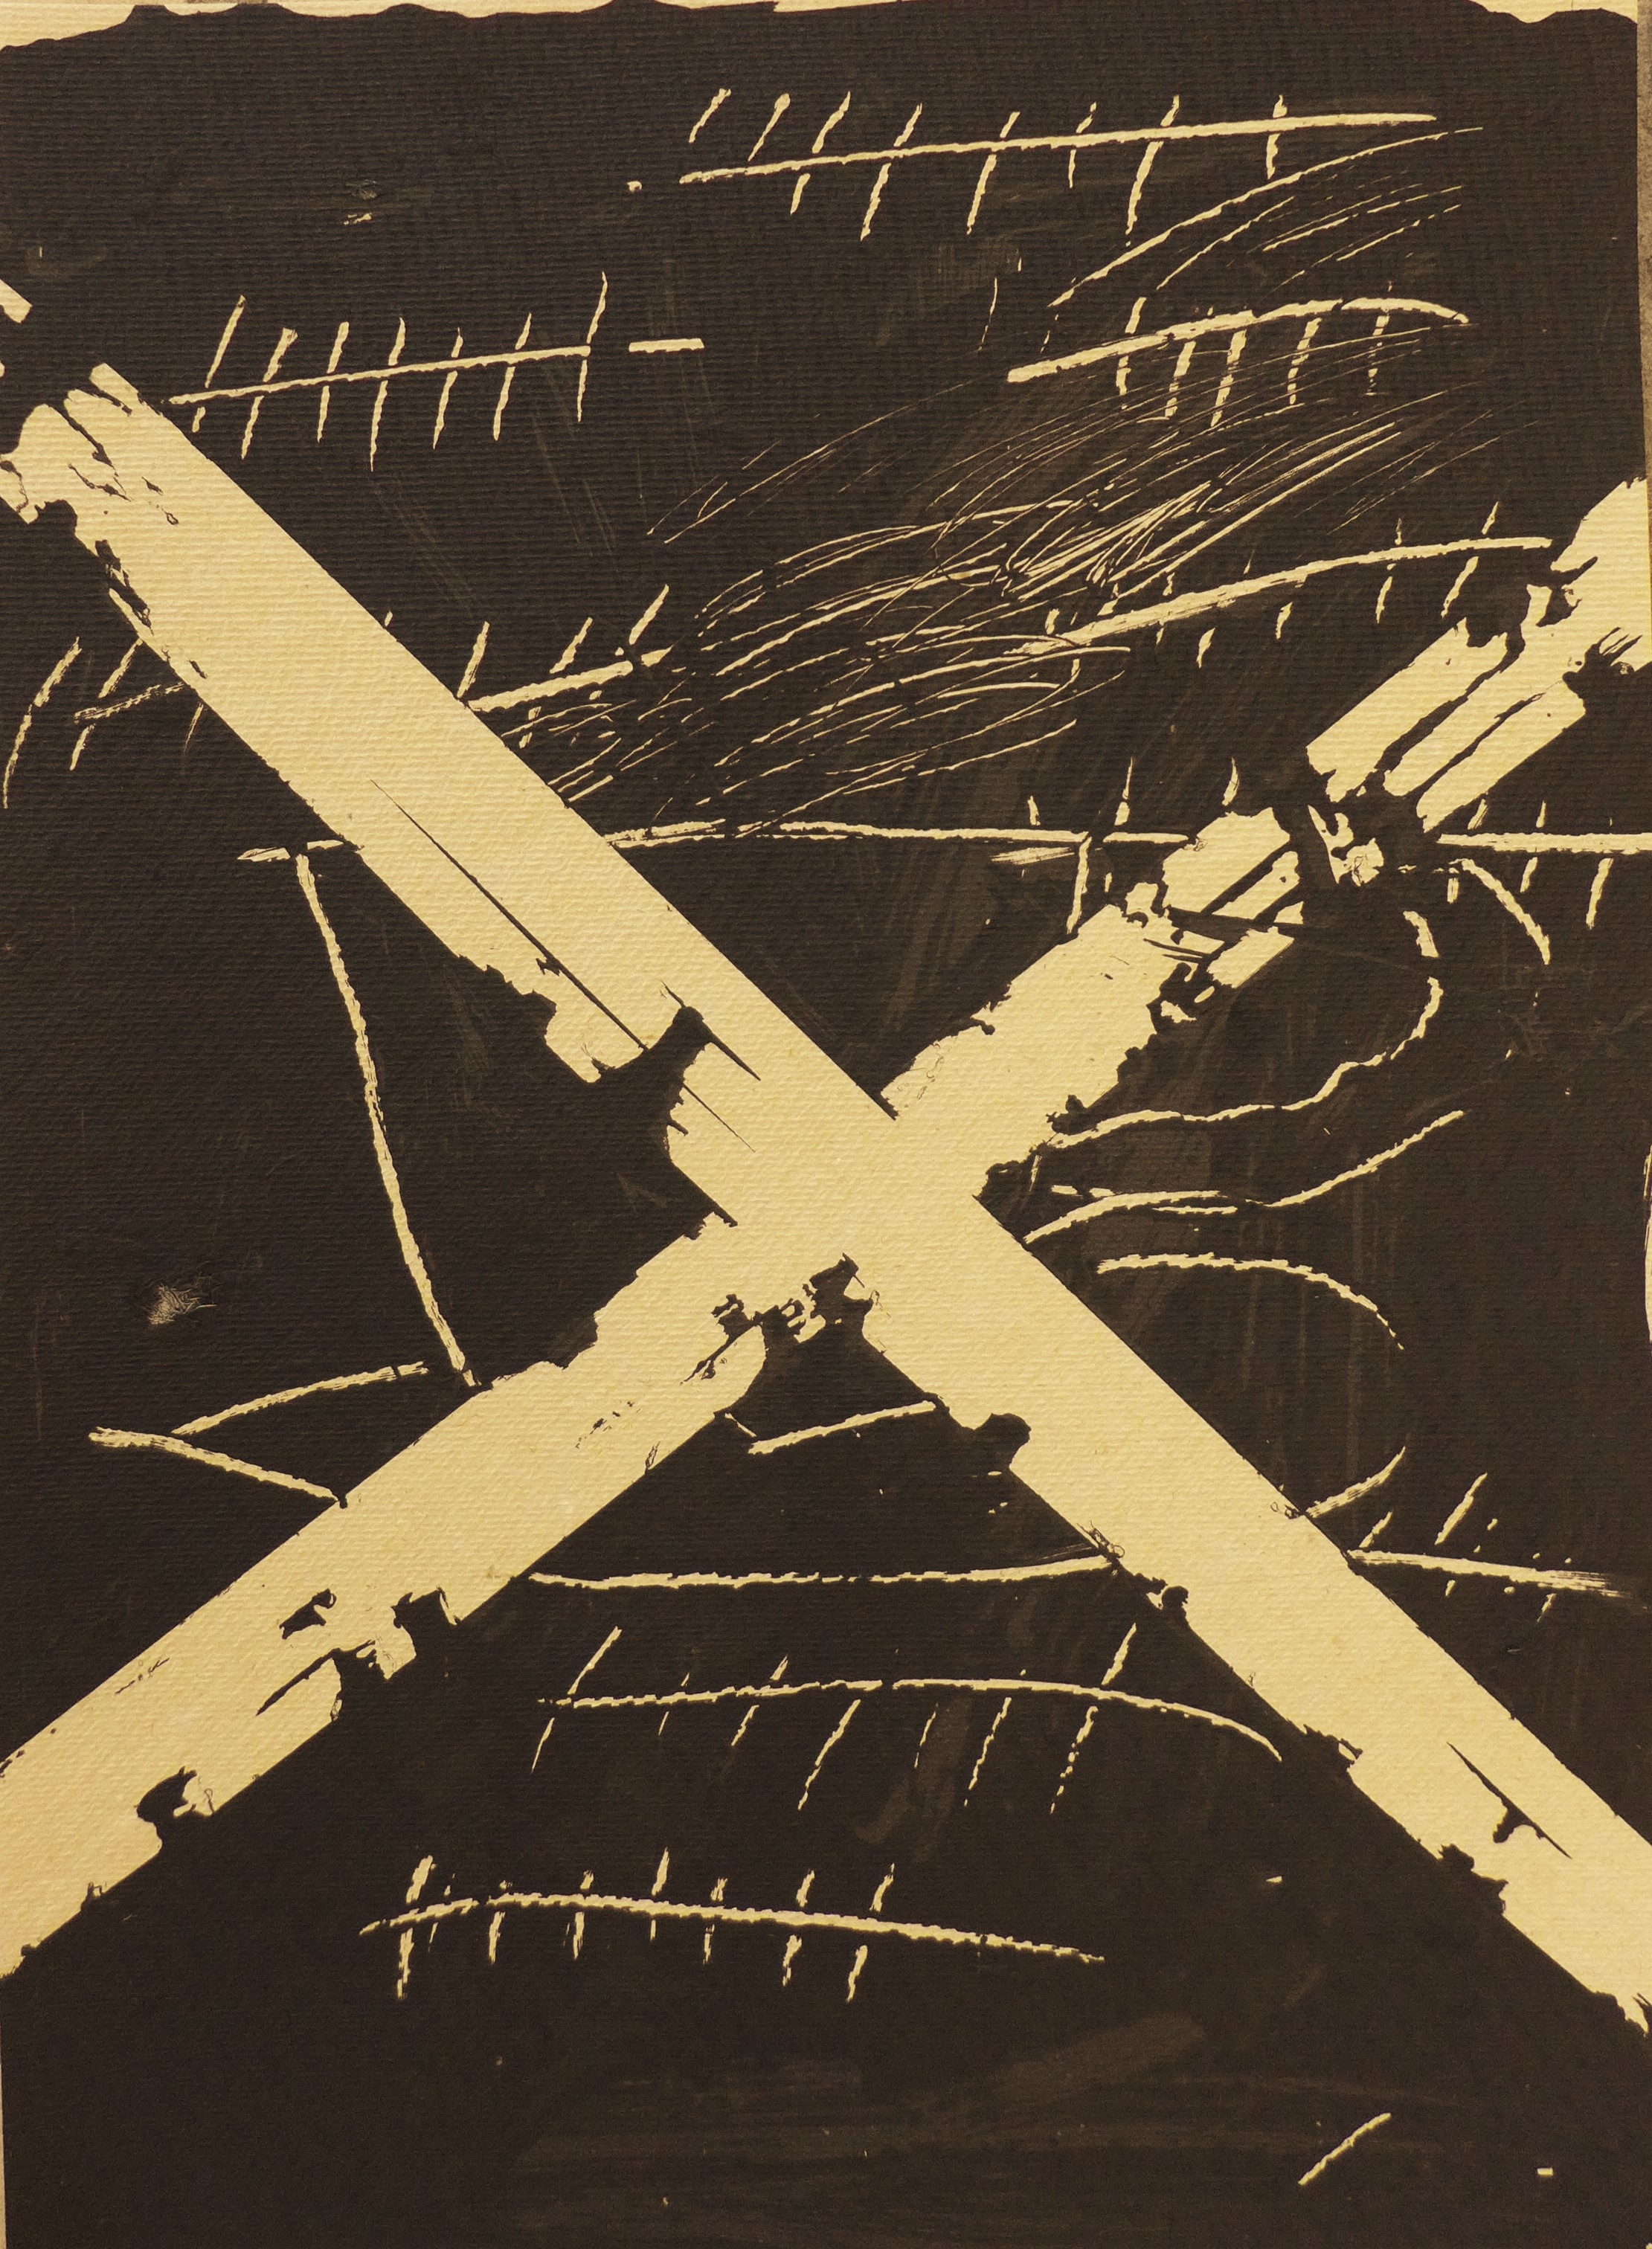 Untitled by Antoni Tàpies, 1945